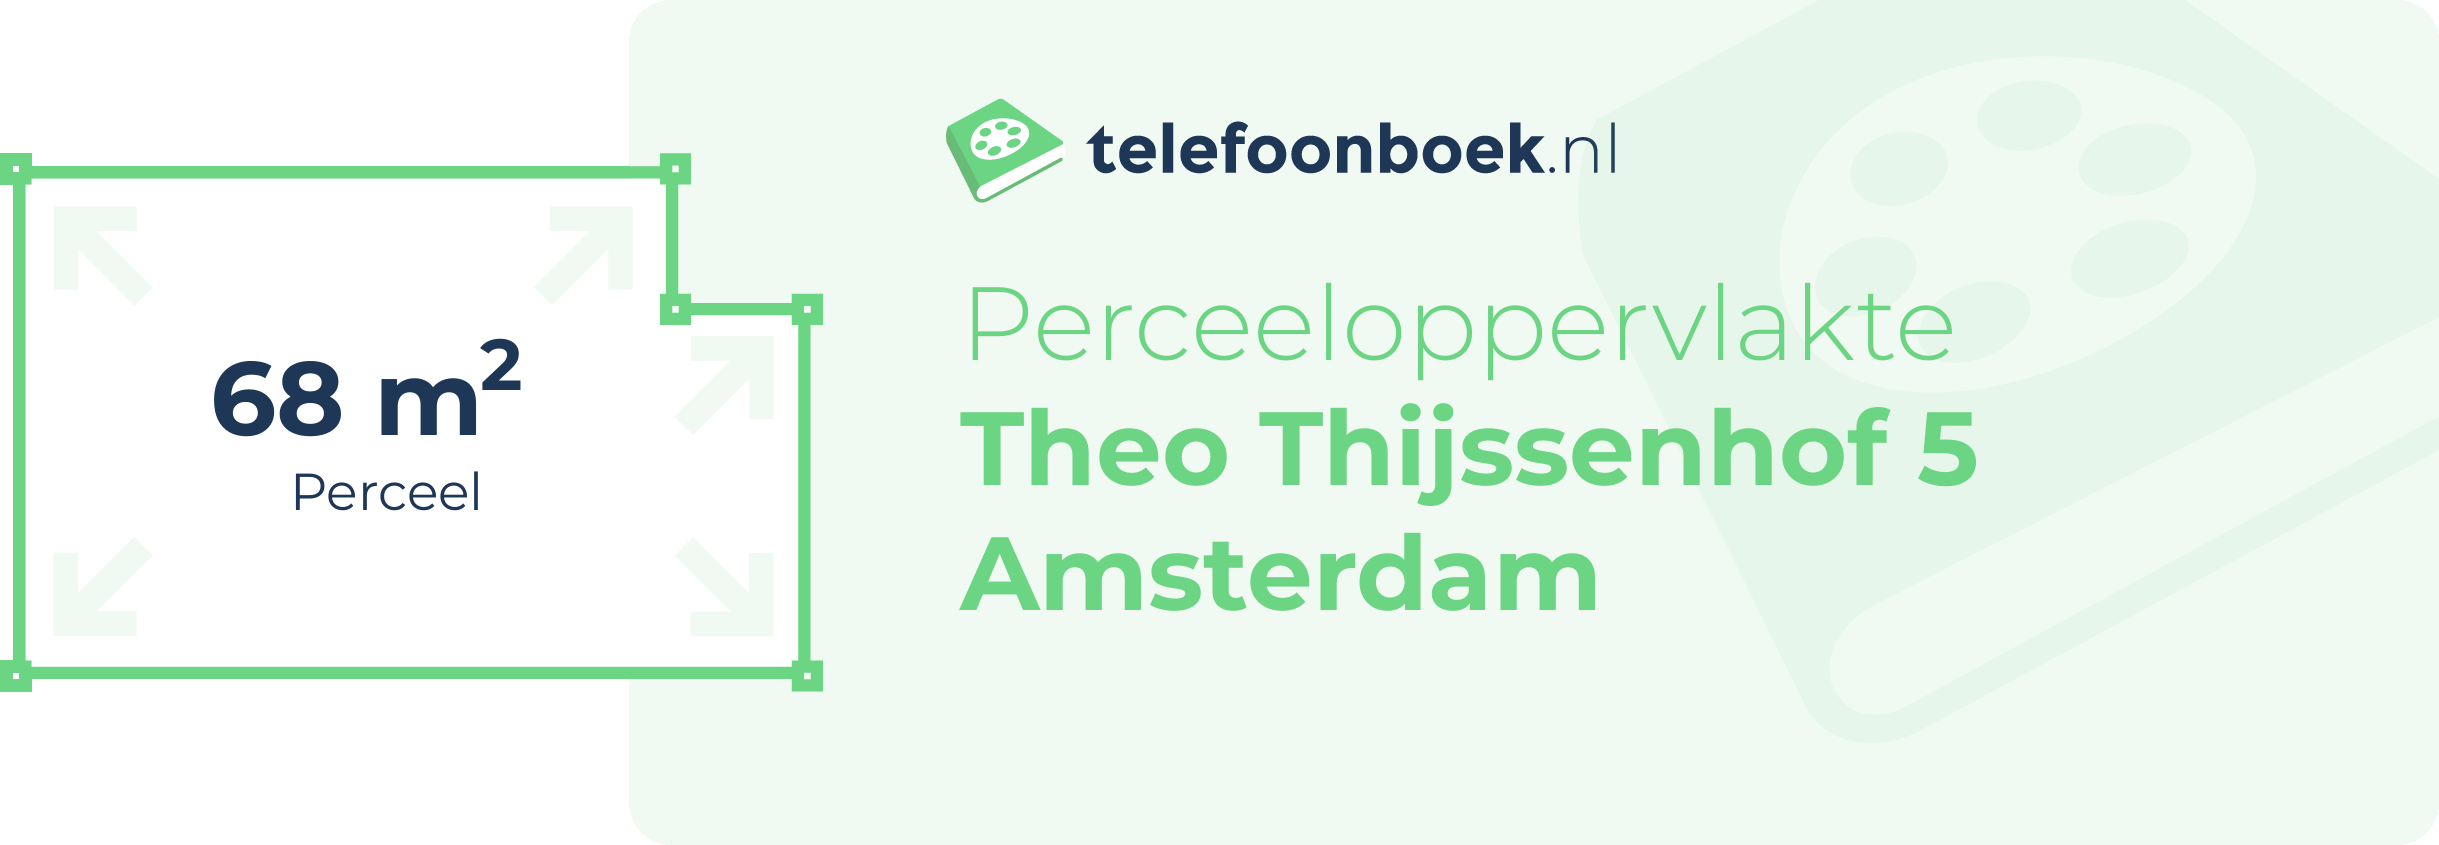 Perceeloppervlakte Theo Thijssenhof 5 Amsterdam